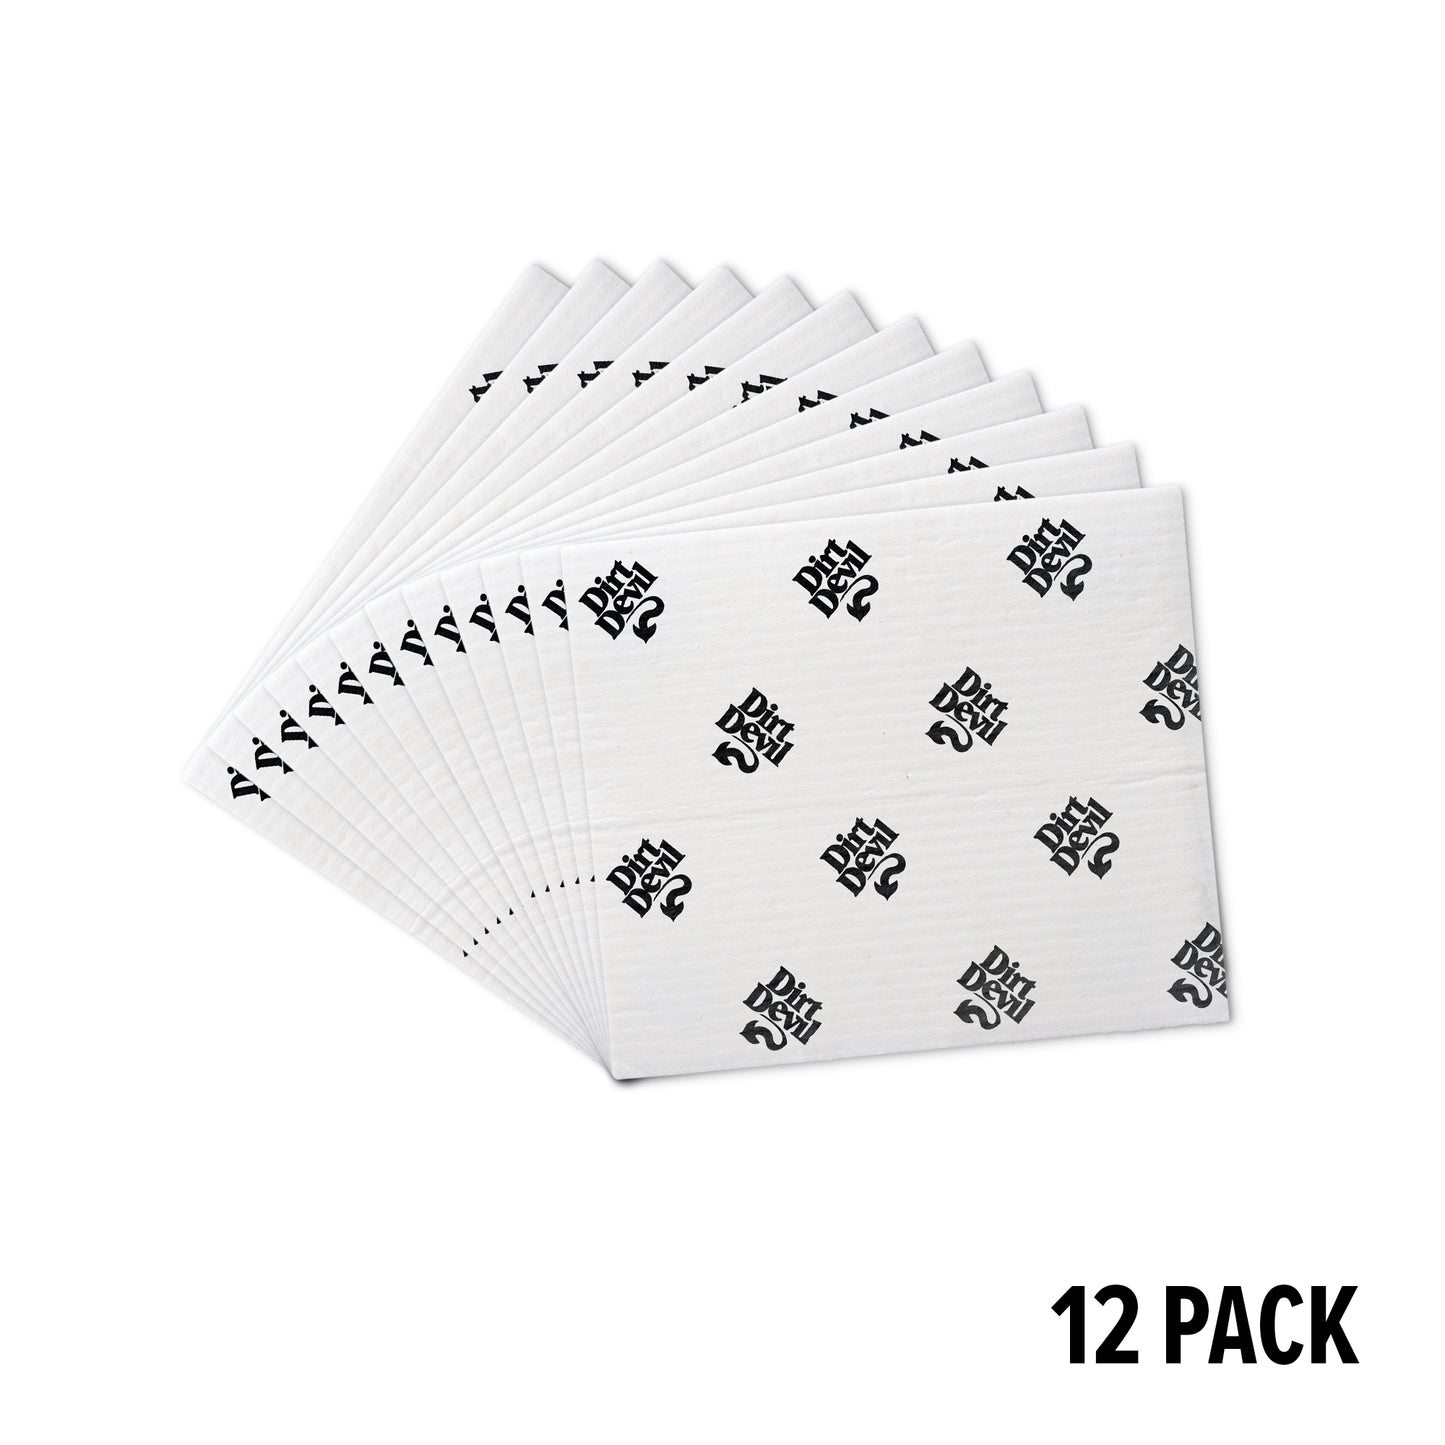 Reusable Paper Towel (12 Pack)